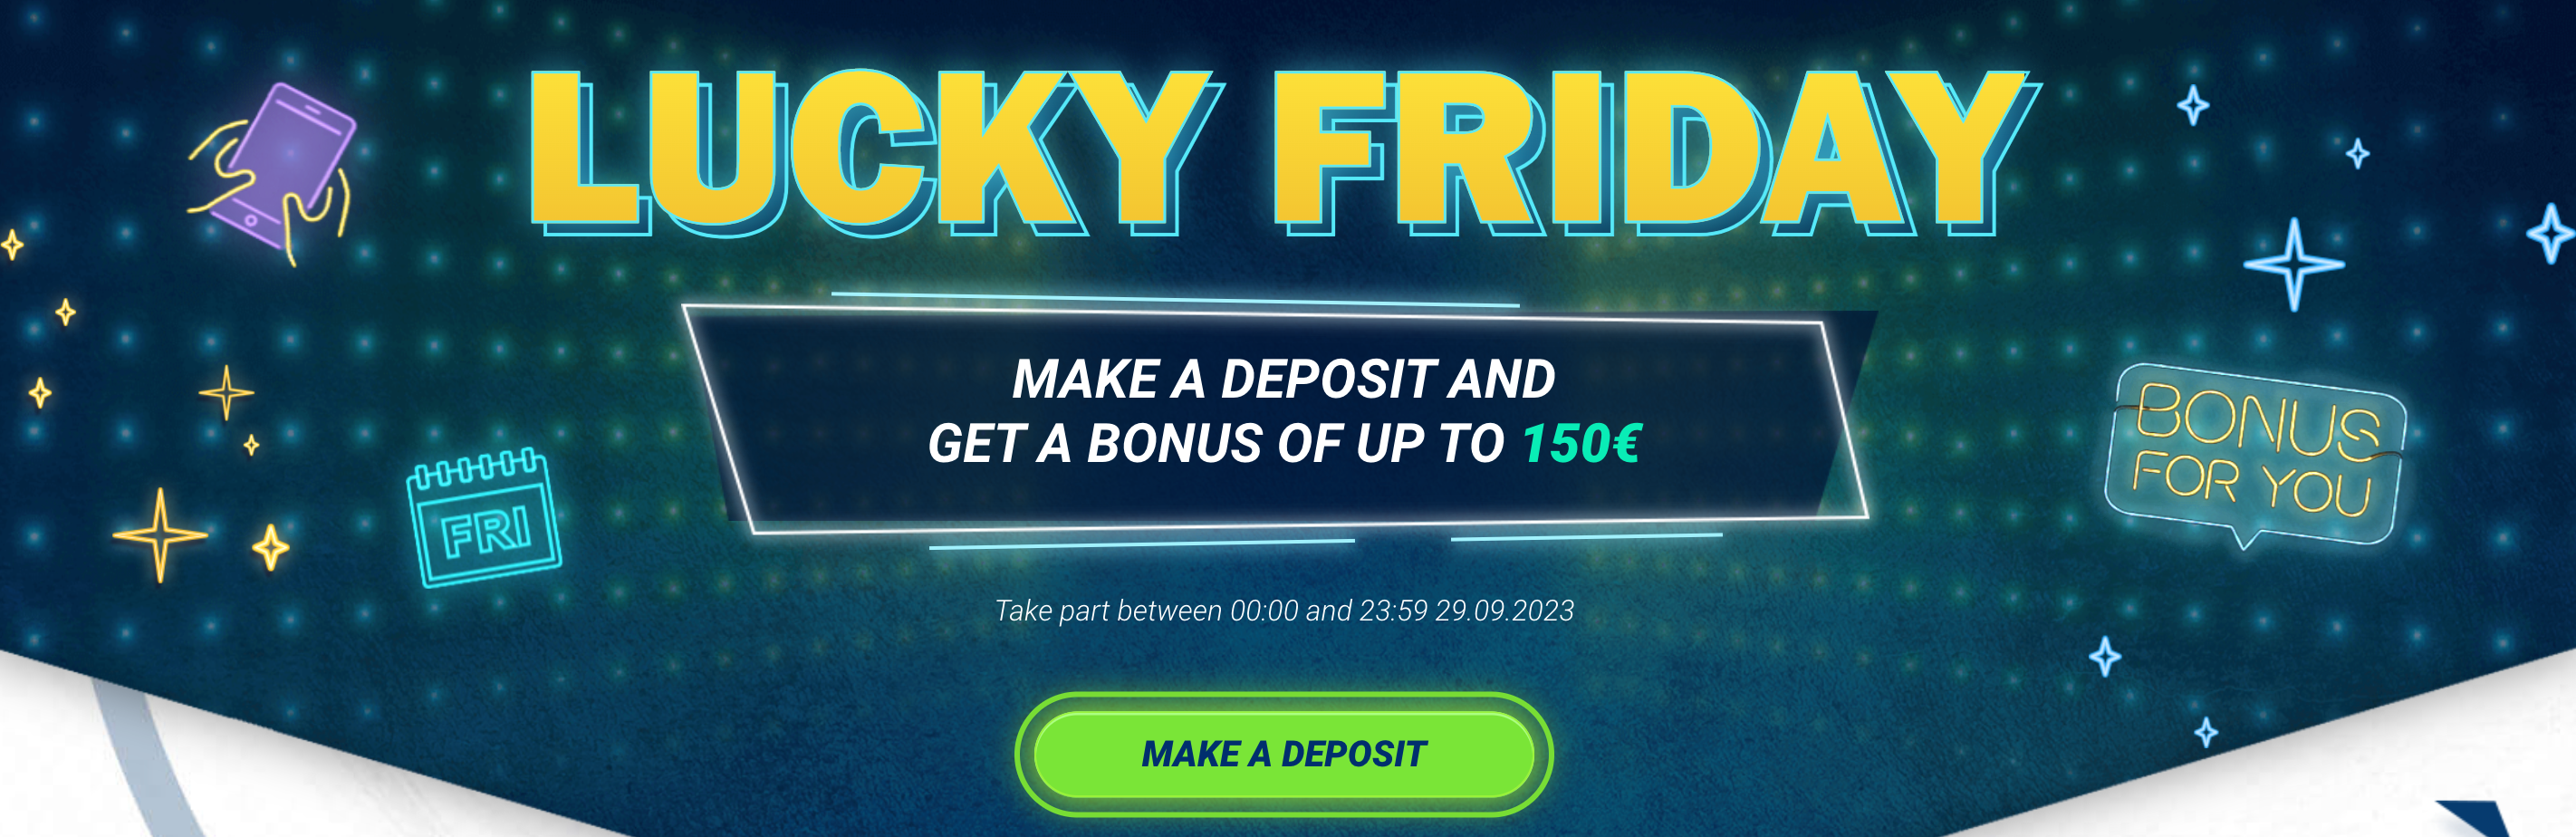 1xBet Lucky Friday Bonus up to 150 EUR